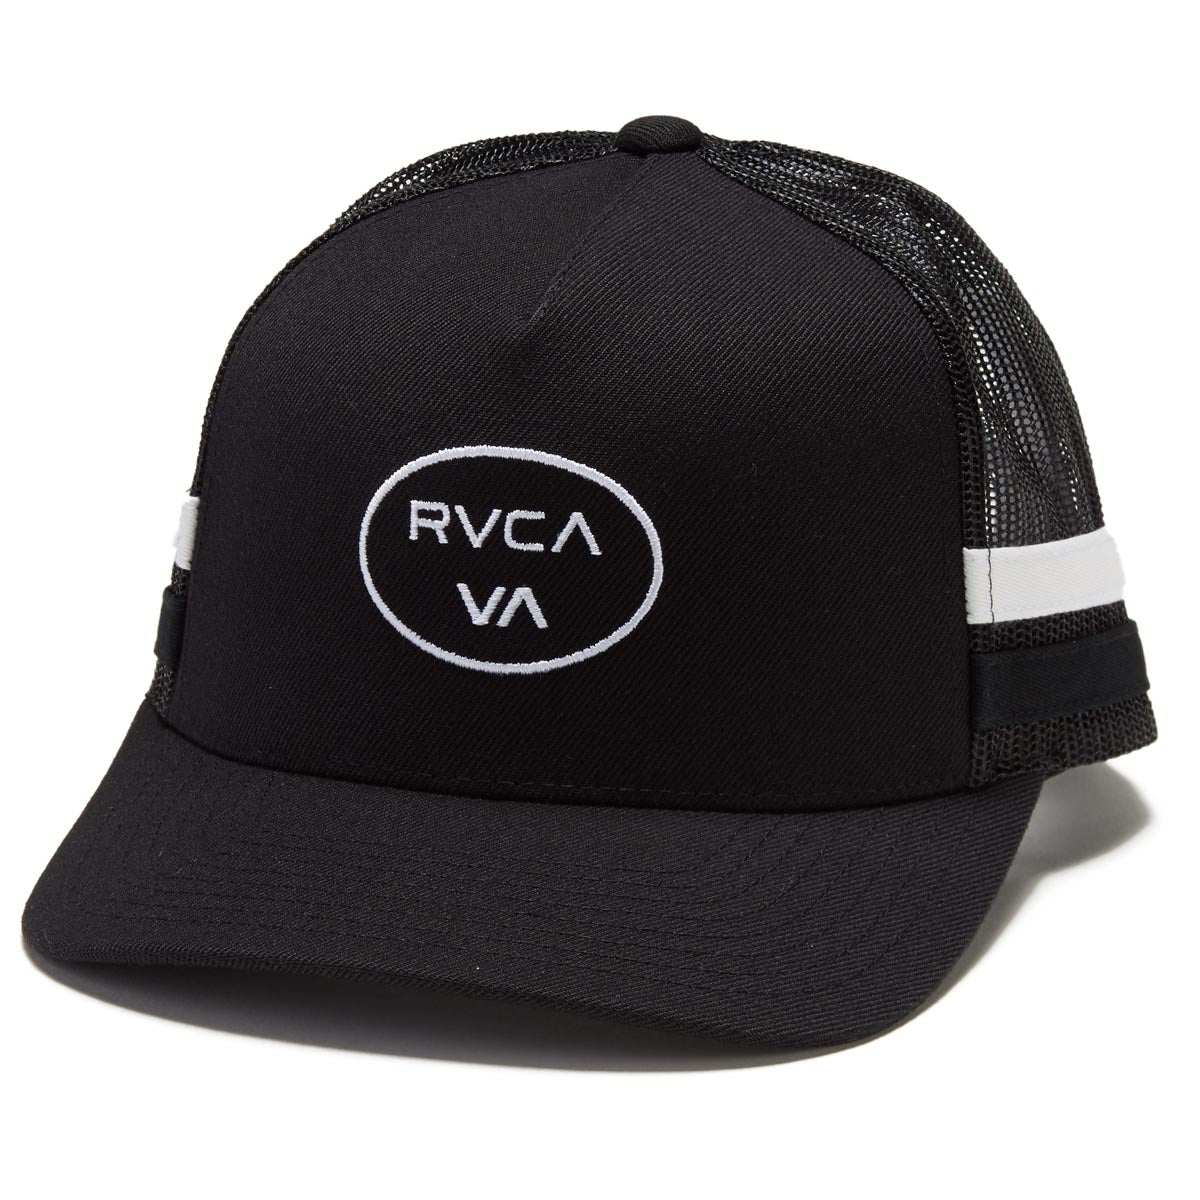 RVCA Va Patch Snapback Hat - Wood image 1